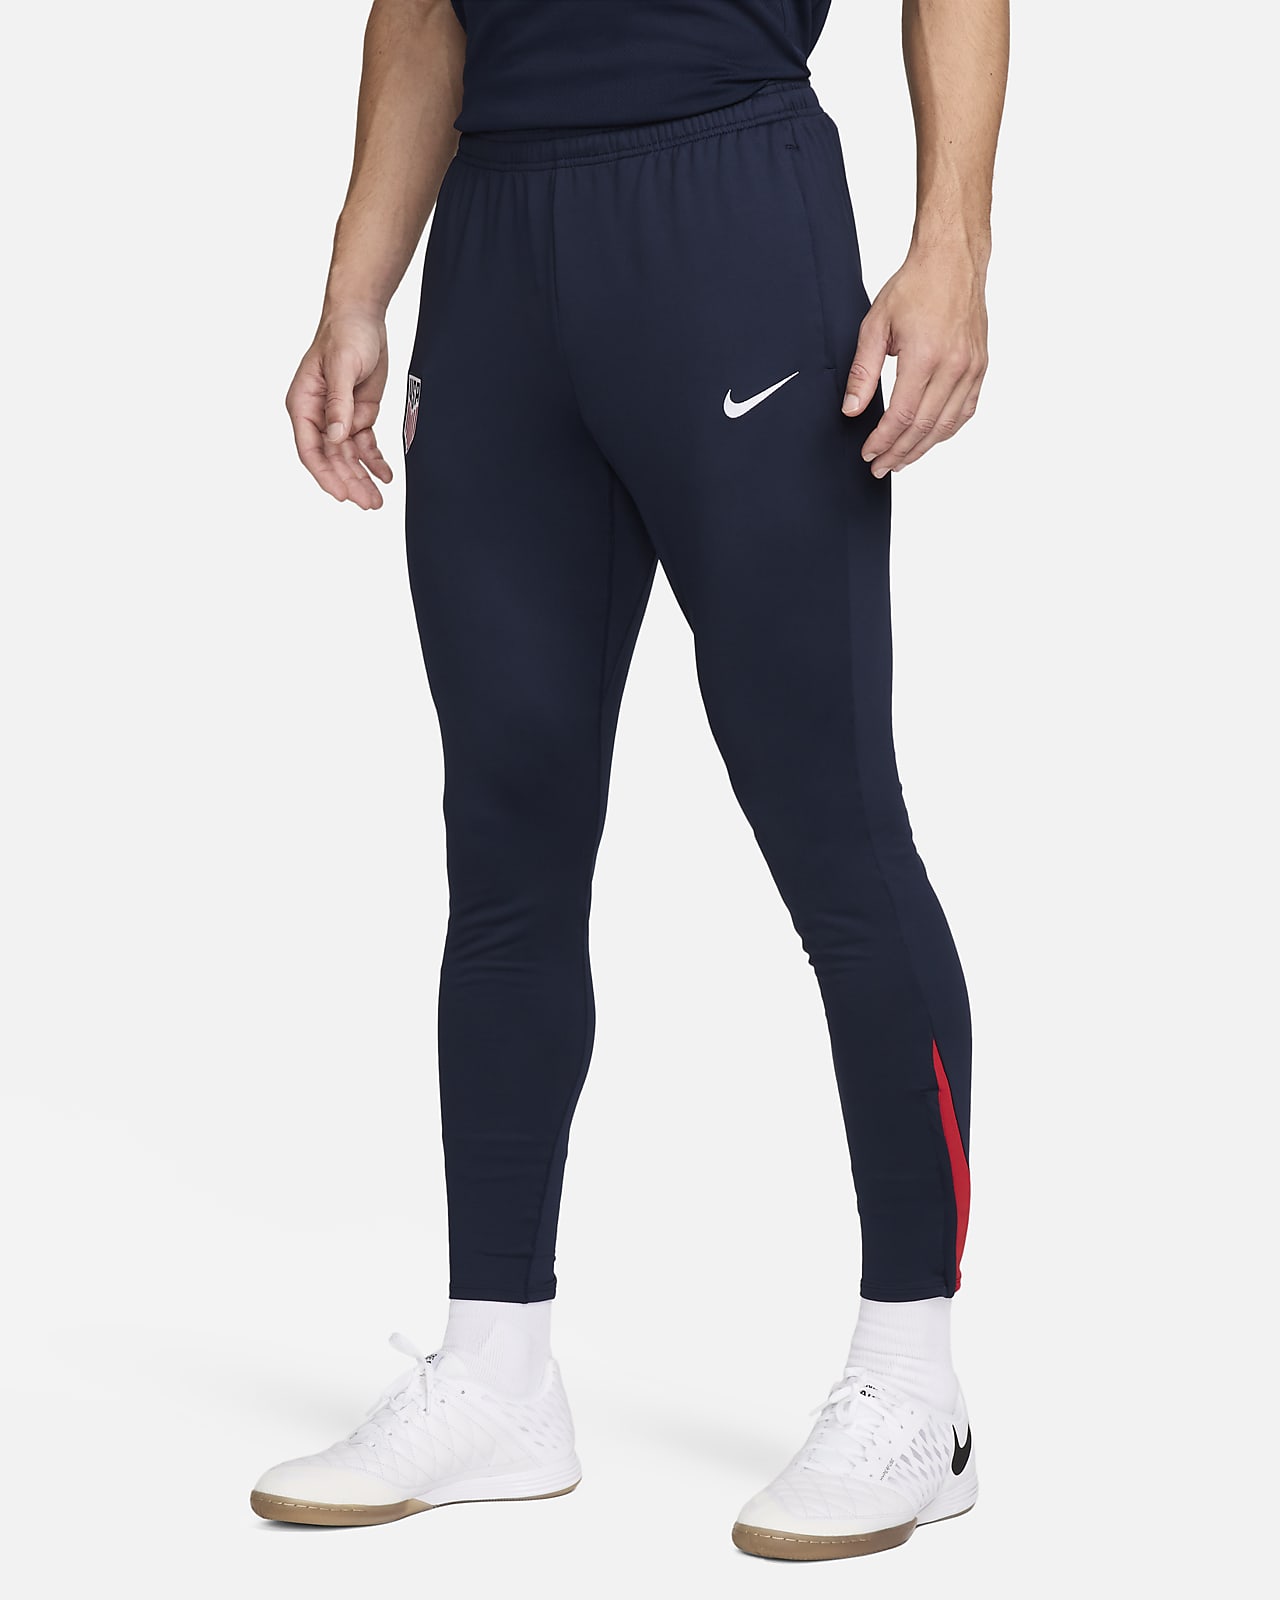 USMNT Strike Men's Nike Dri-FIT Soccer Knit Pants